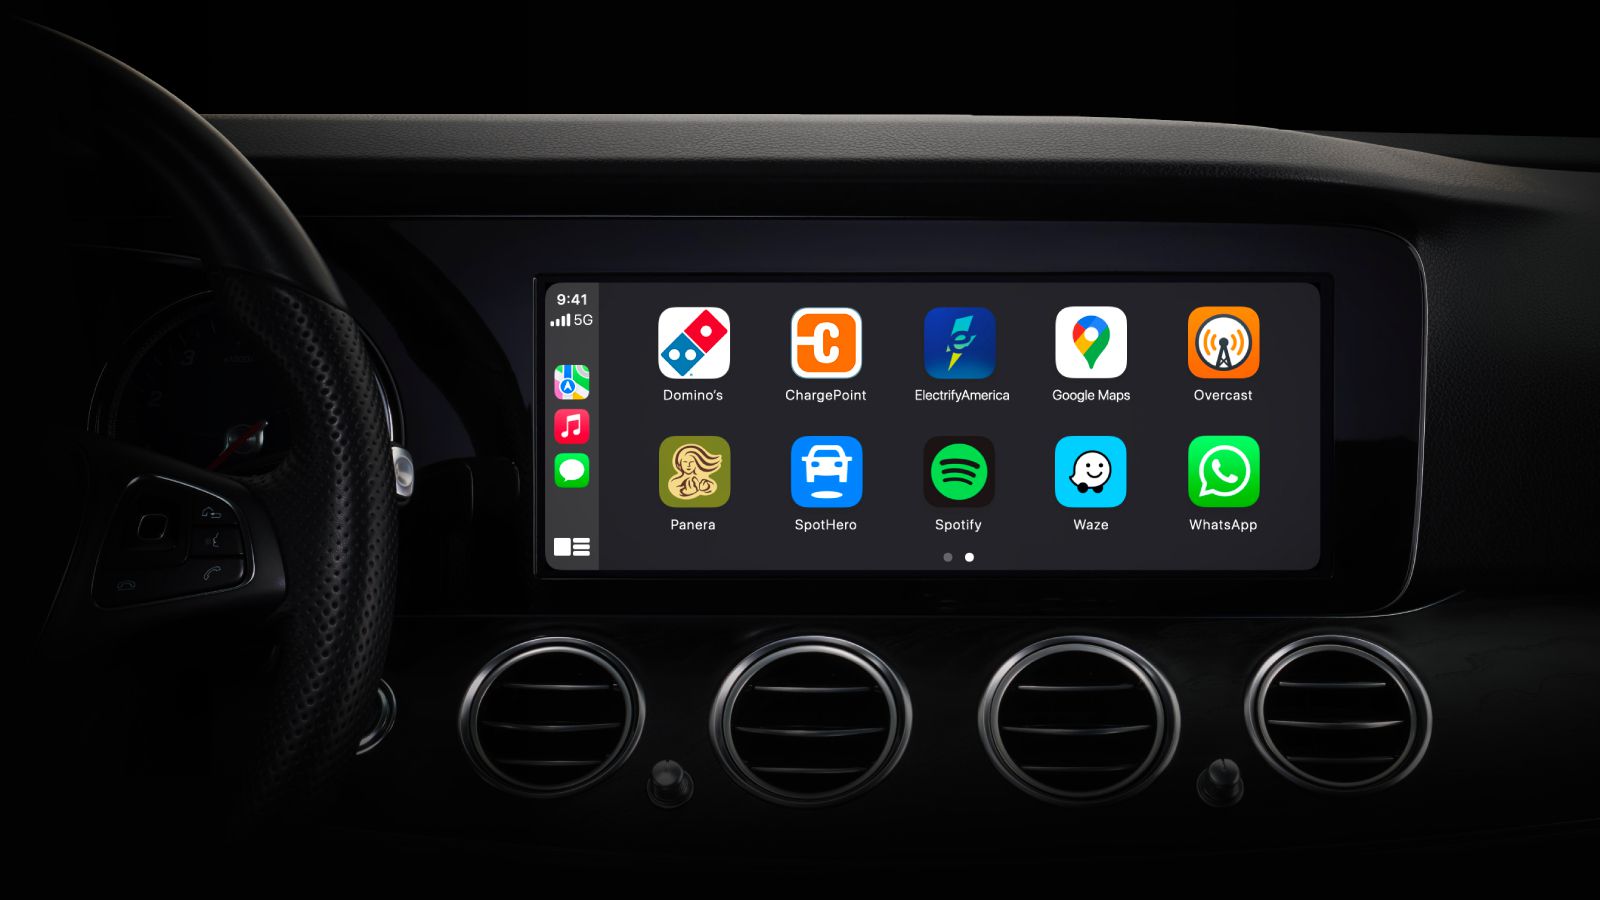 Honda Offering Wireless Apple CarPlay Upgrade for 2018-2022 Accords -  MacRumors